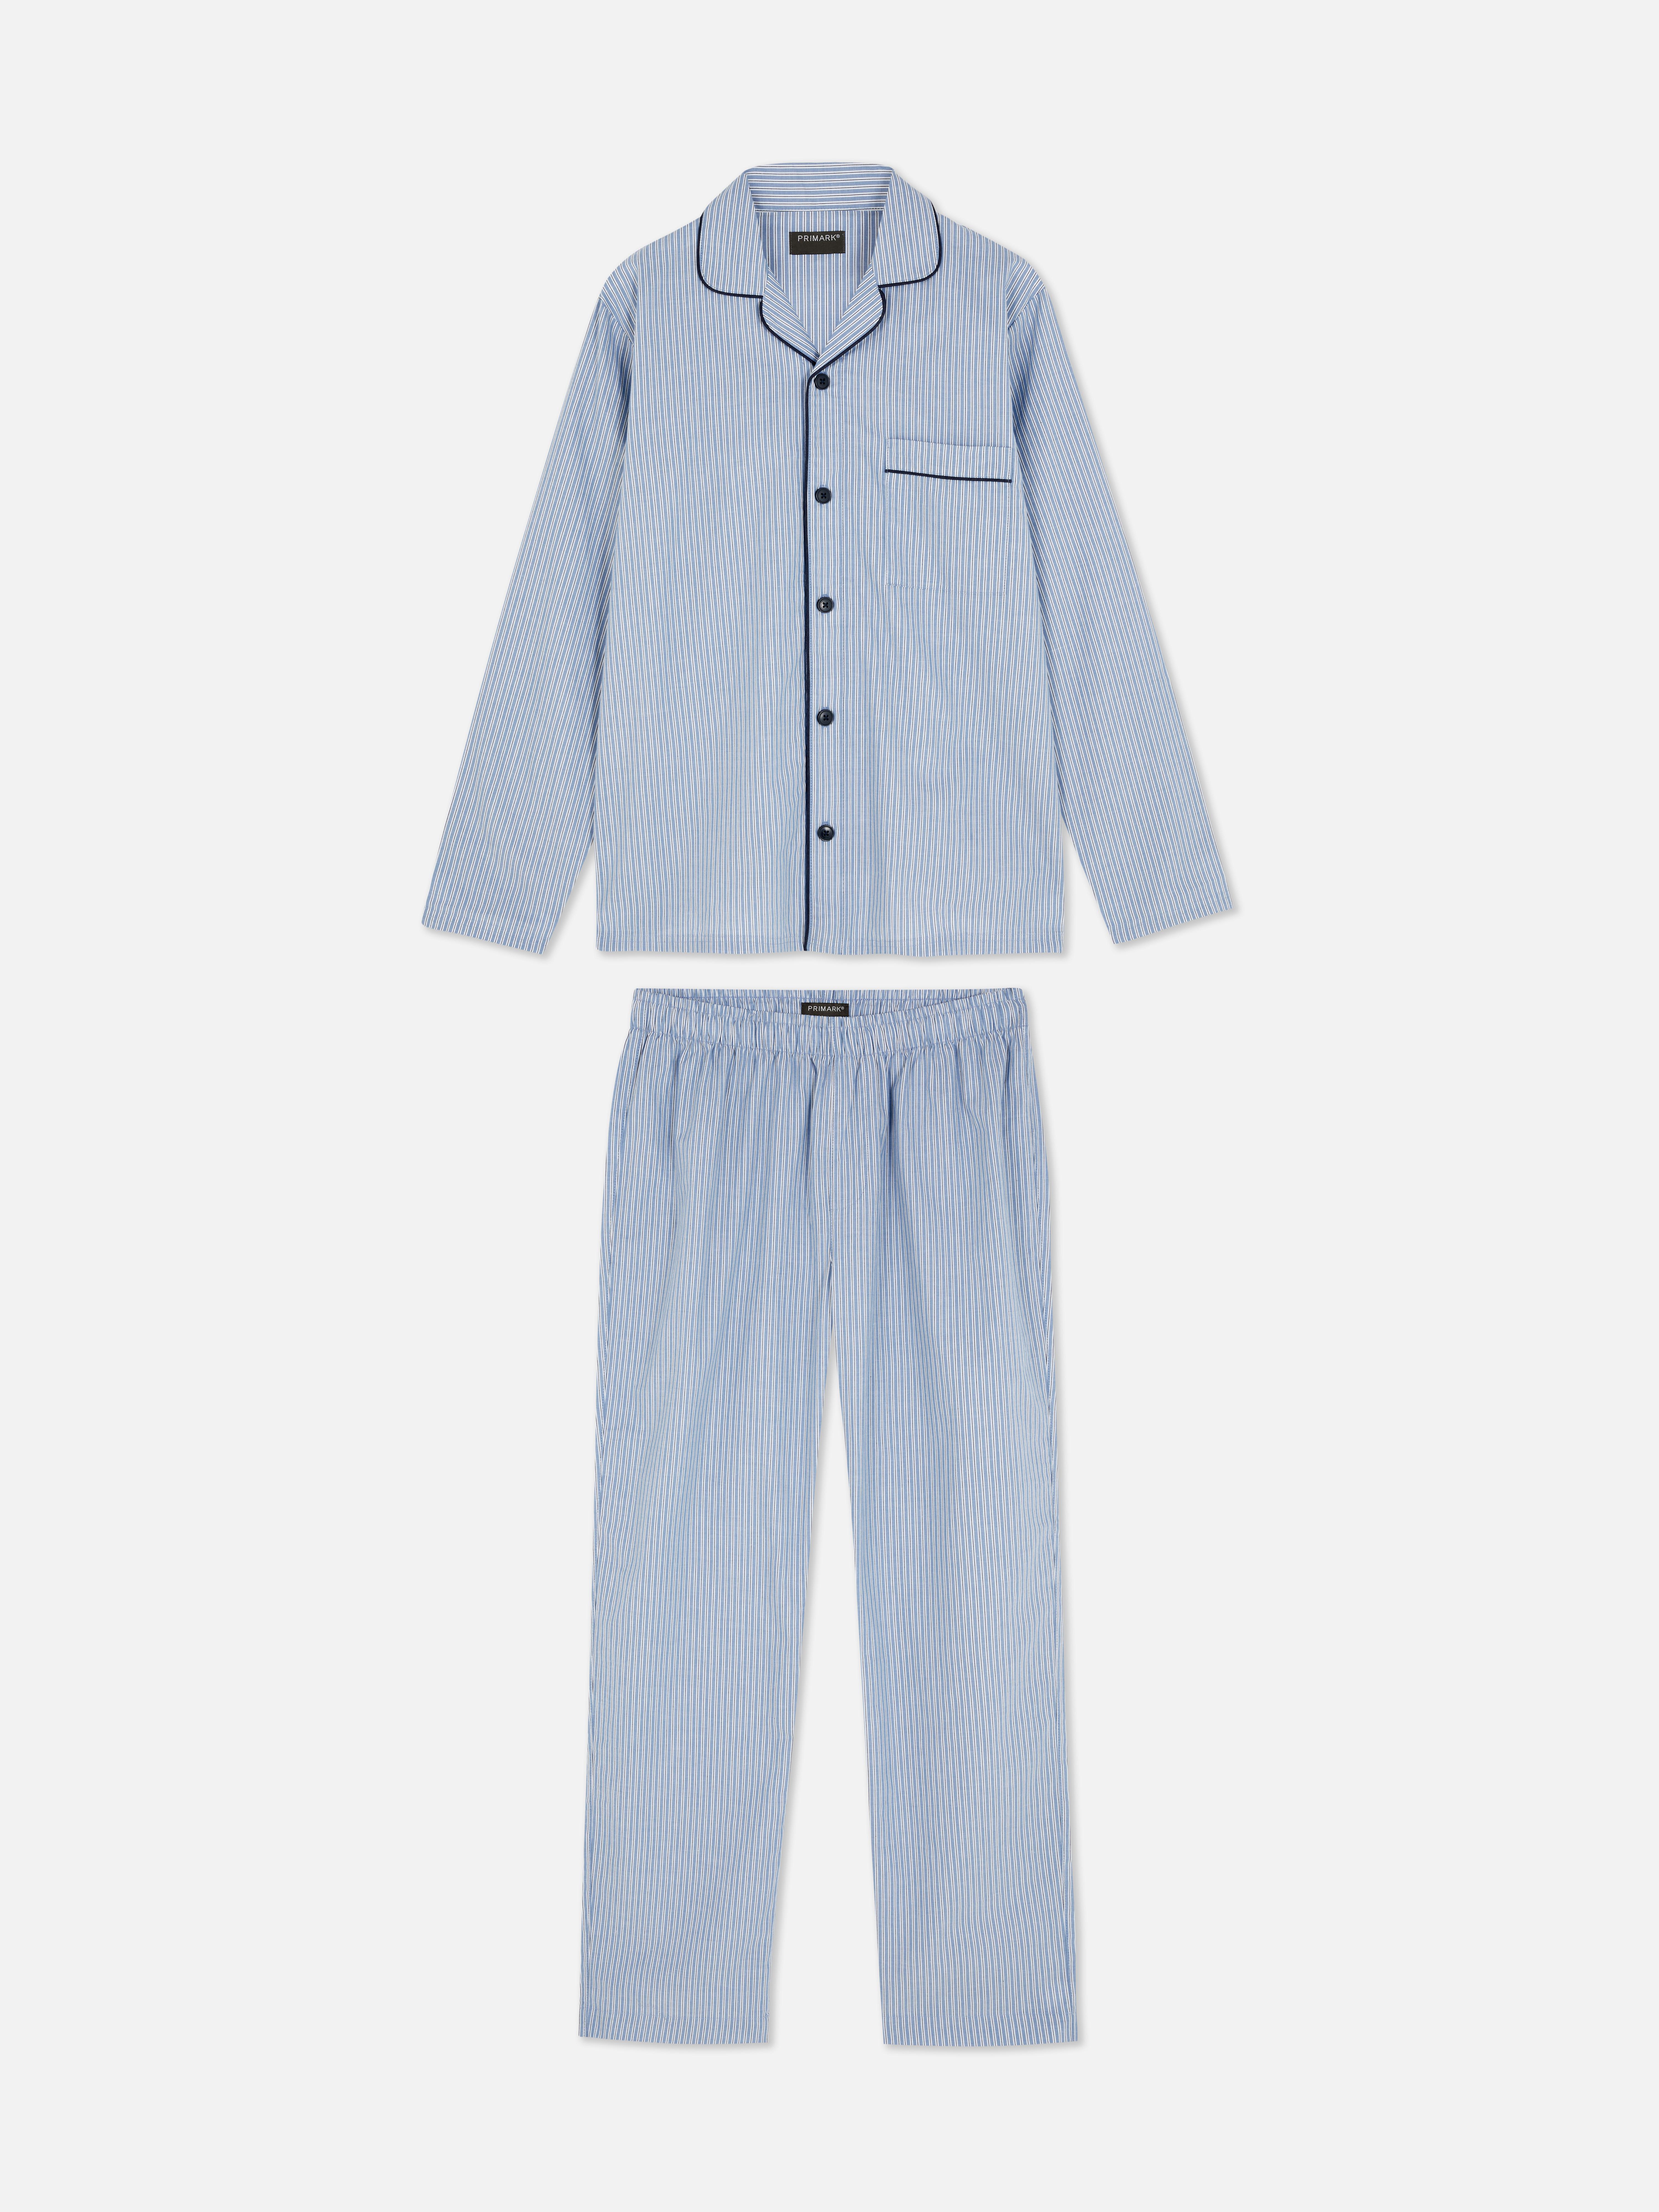 Pijama clásico de popelina